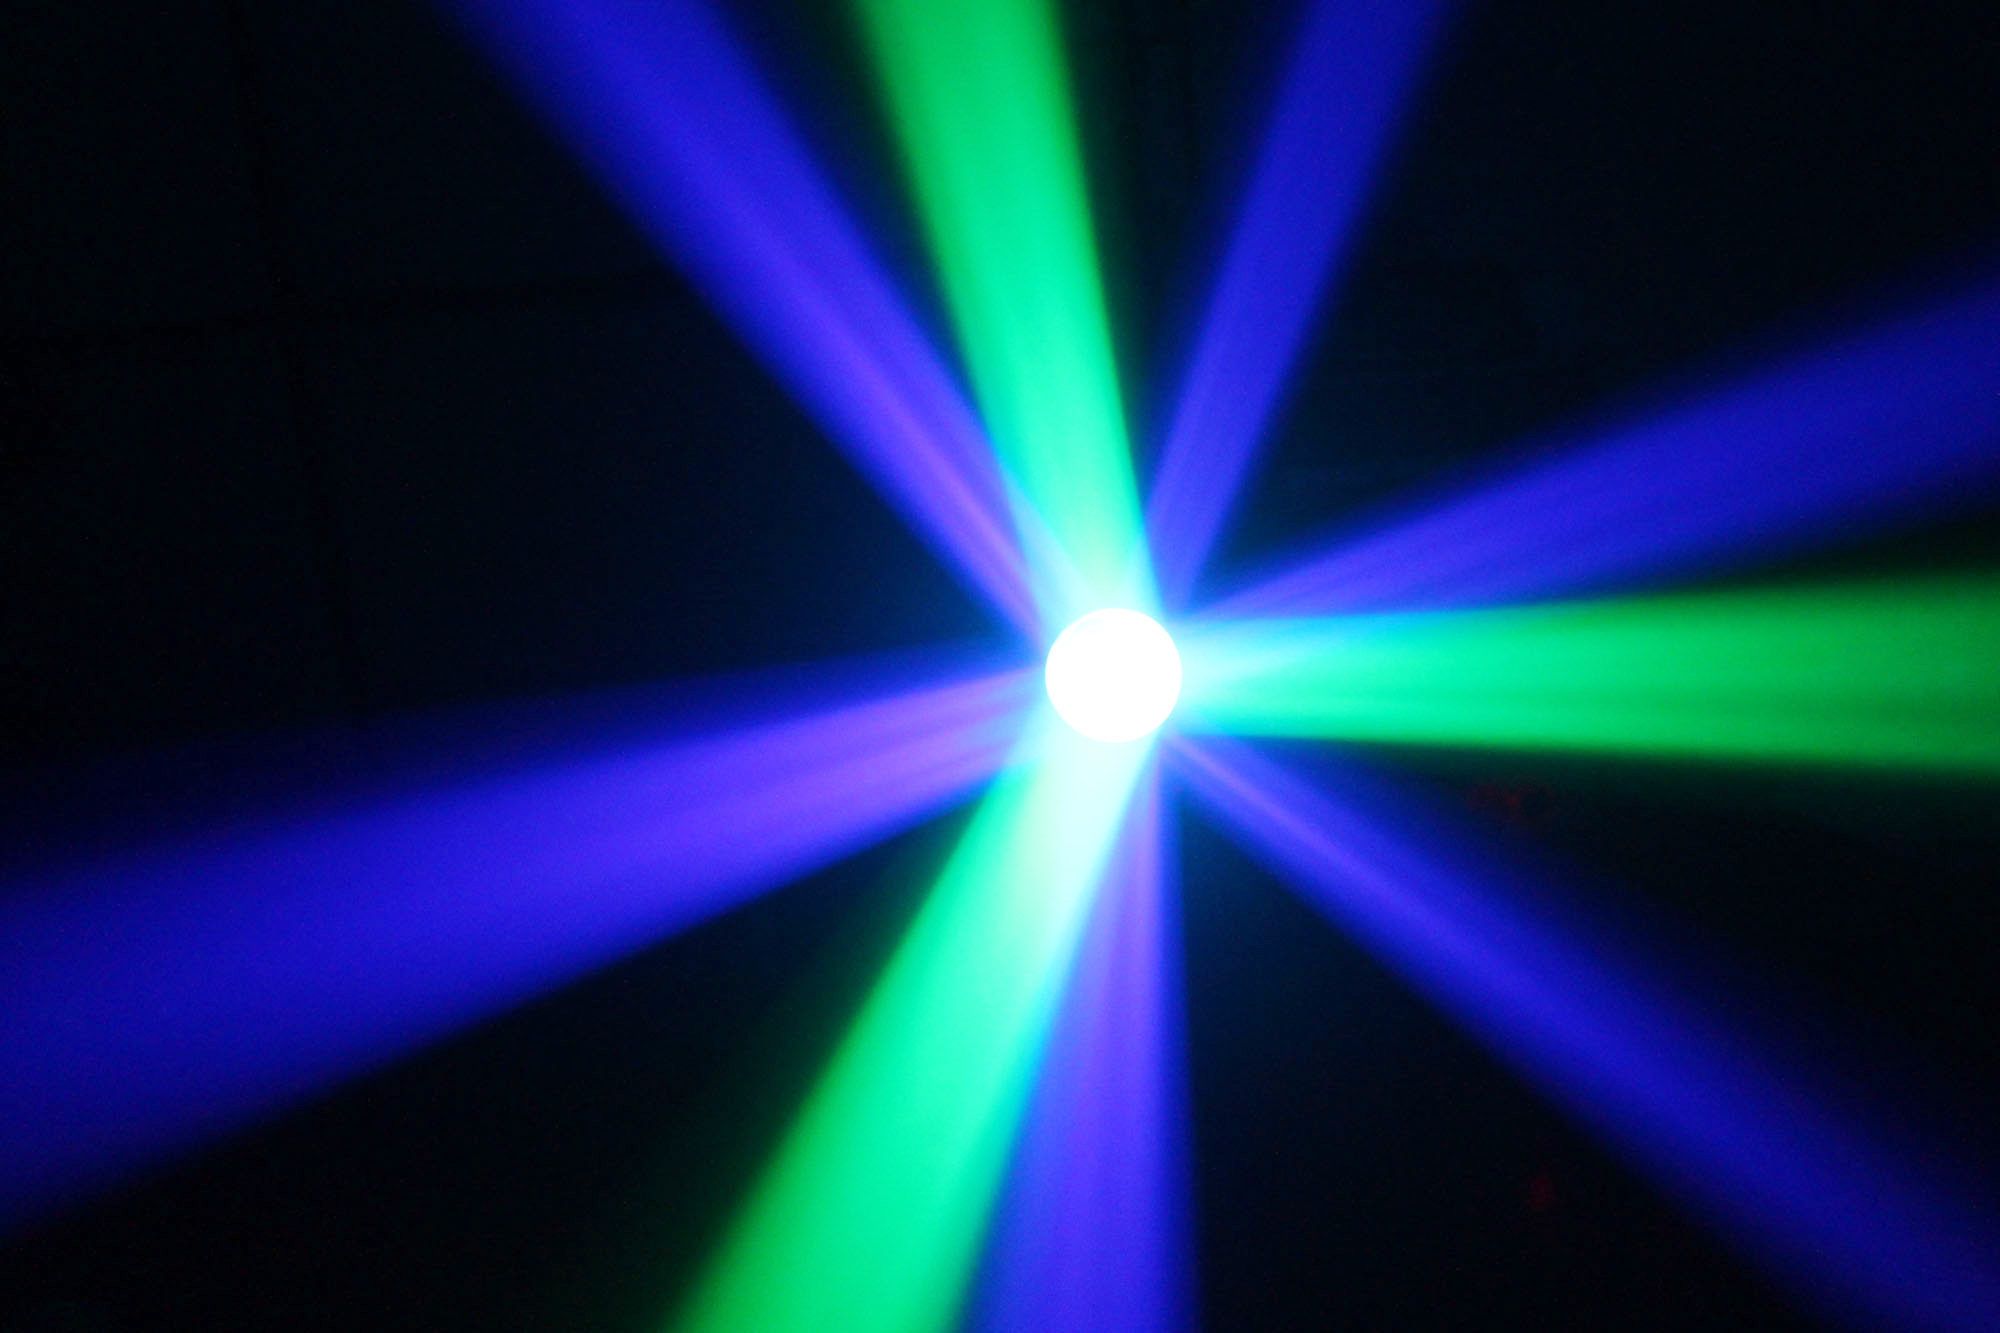 KLASSE BEAMZ LED MOONFLOWER 20W RGBAW LICHTEFEKTMASCHINE PARTY BELEUCHTUNG NEU 